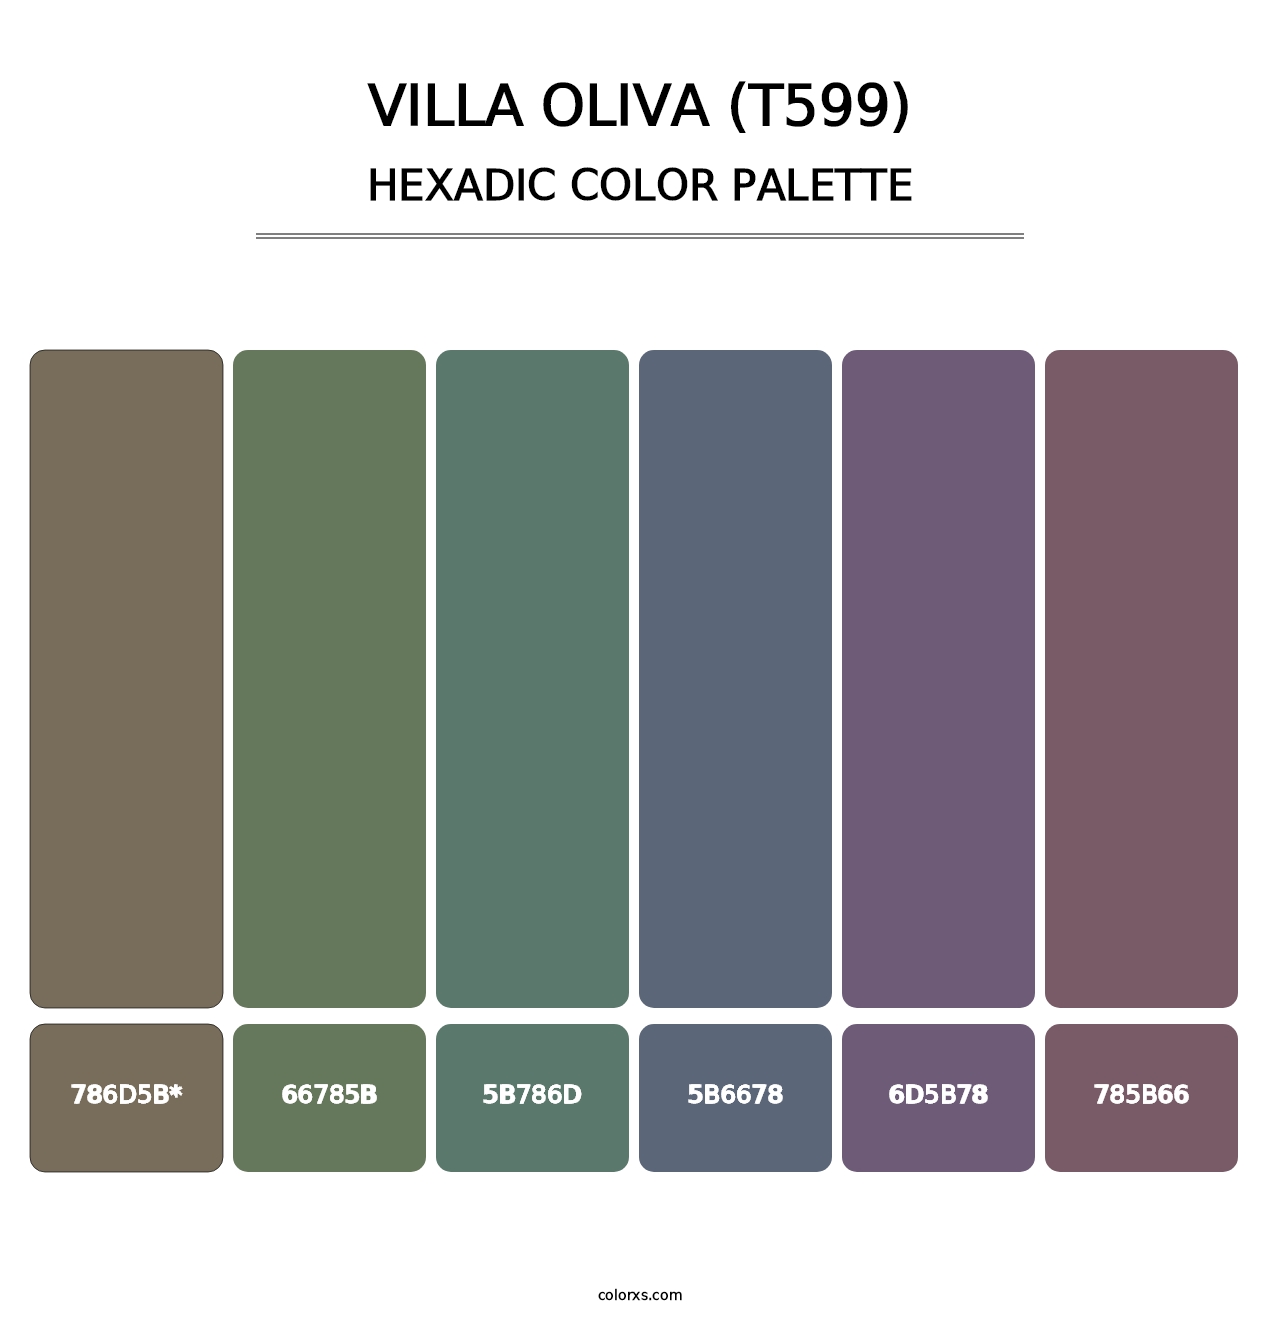 Villa Oliva (T599) - Hexadic Color Palette